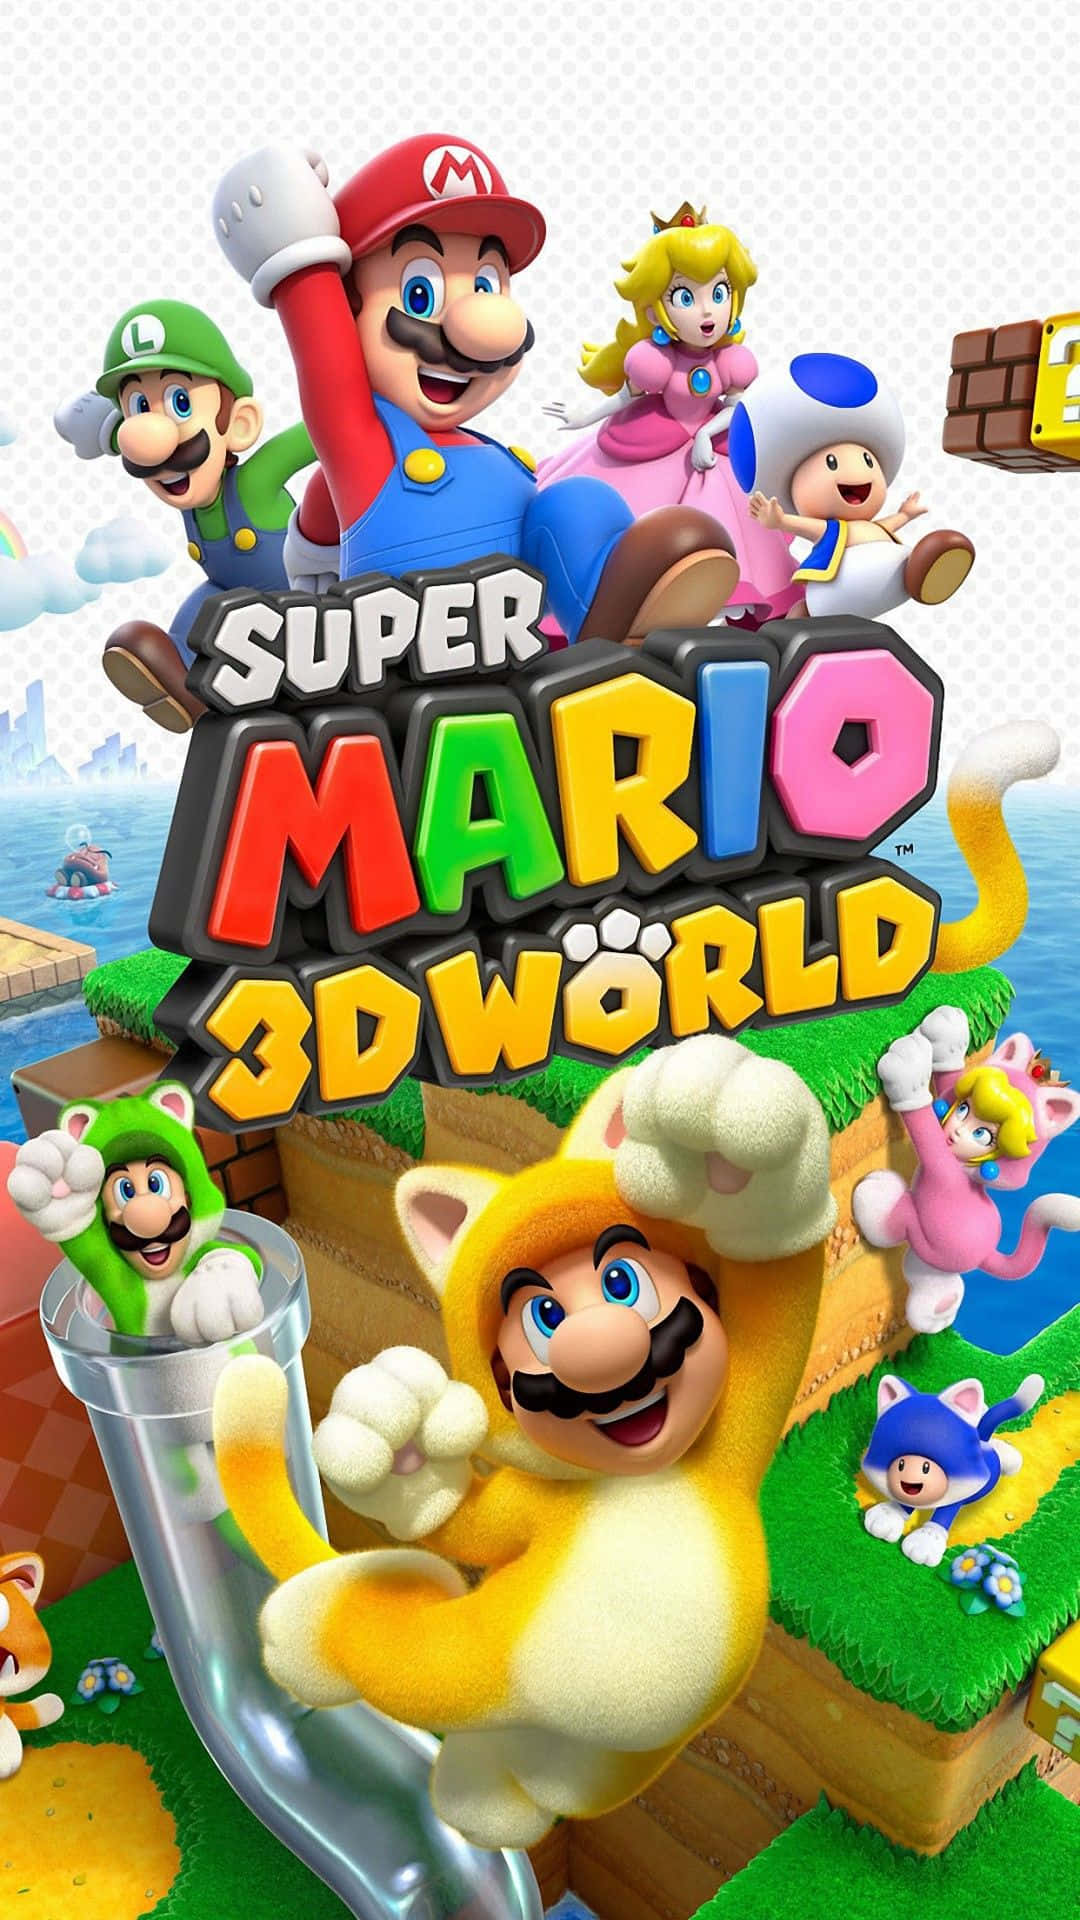 Get ready to join Mario and Luigi in Mushroom Kingdom